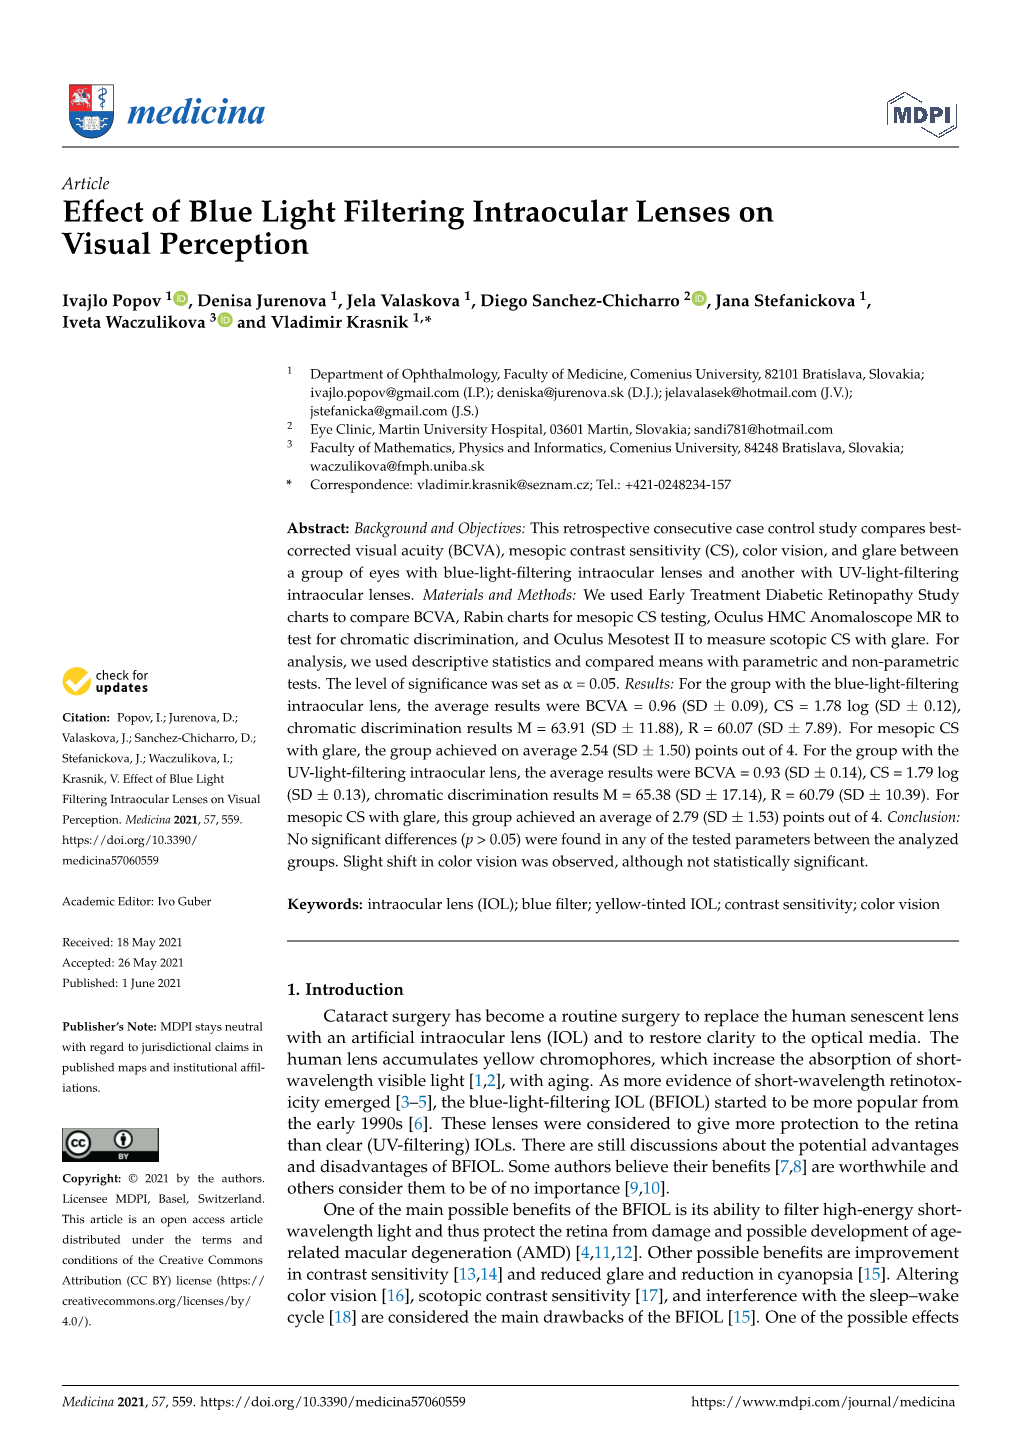 Effect of Blue Light Filtering Intraocular Lenses on Visual Perception